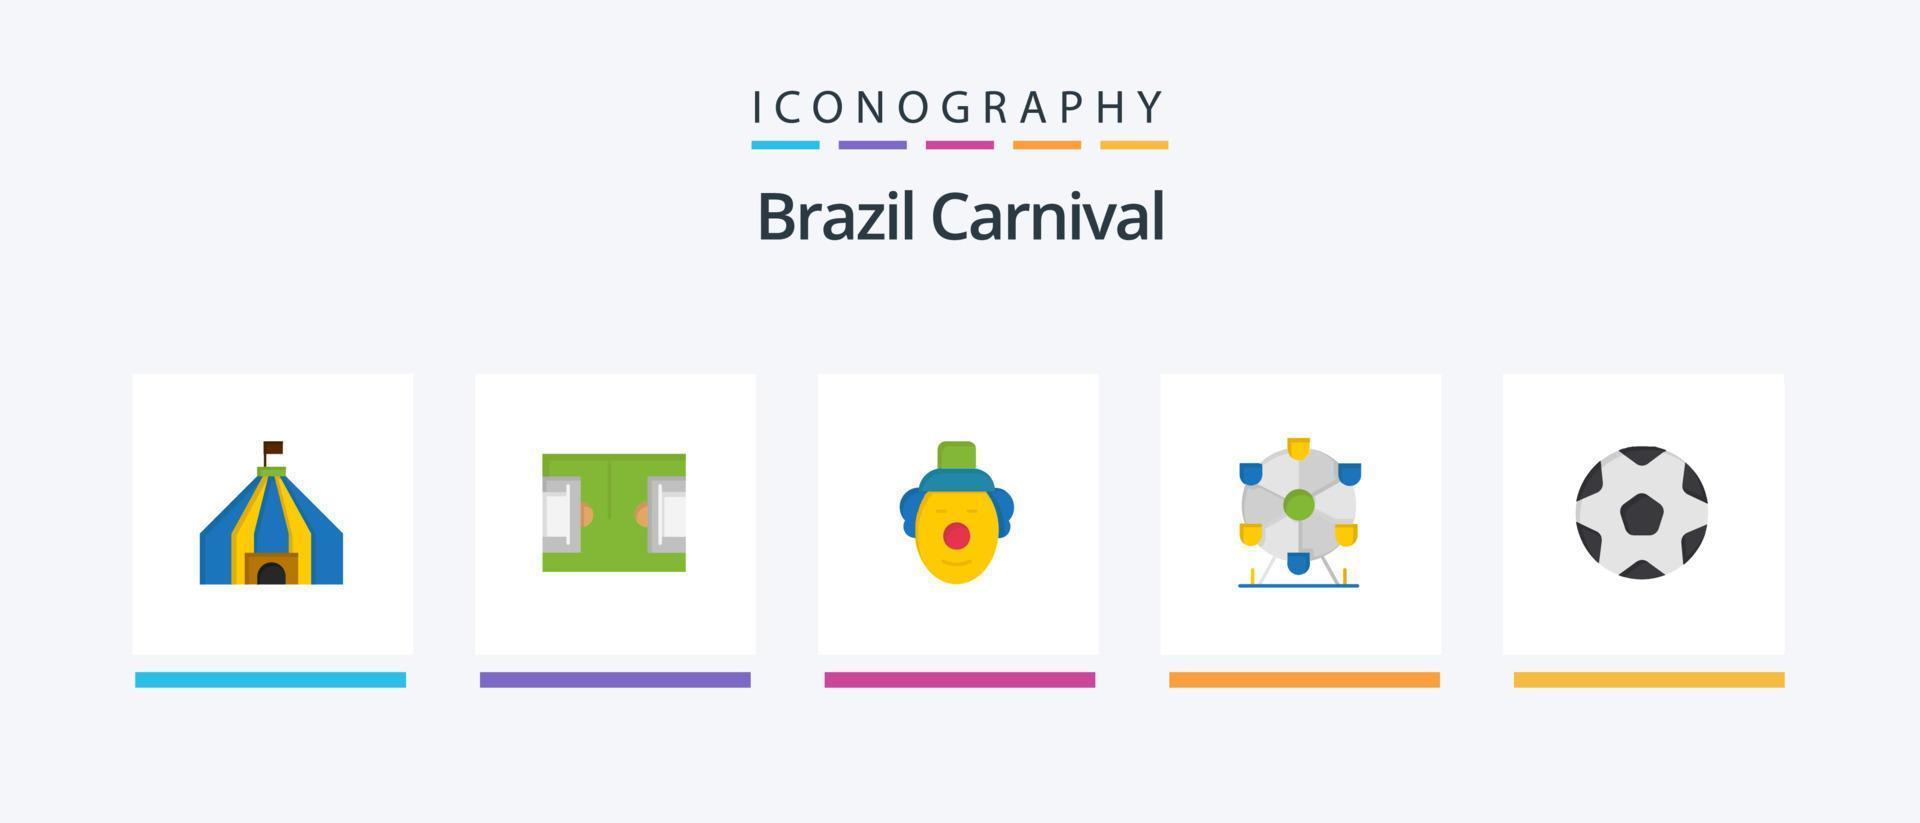 paquete de iconos flat 5 de carnaval de brasil que incluye circo. bufón. campo. celebracion. brasileño. diseño de iconos creativos vector